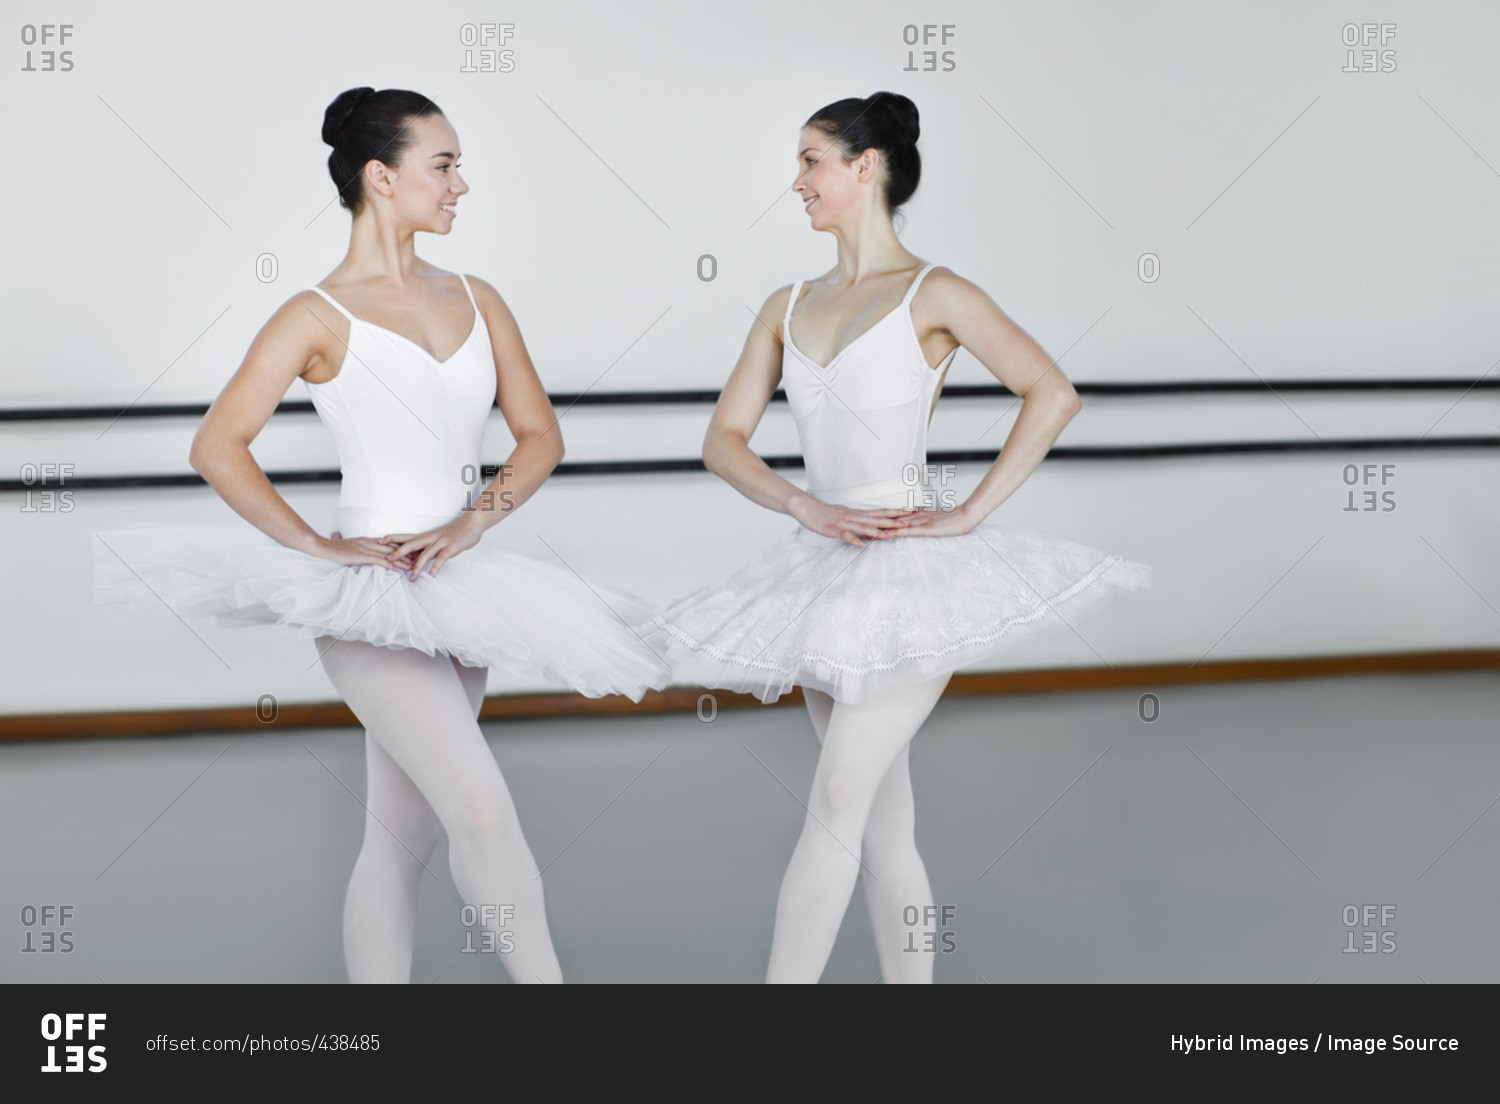 Ballet dancers posing together in studio